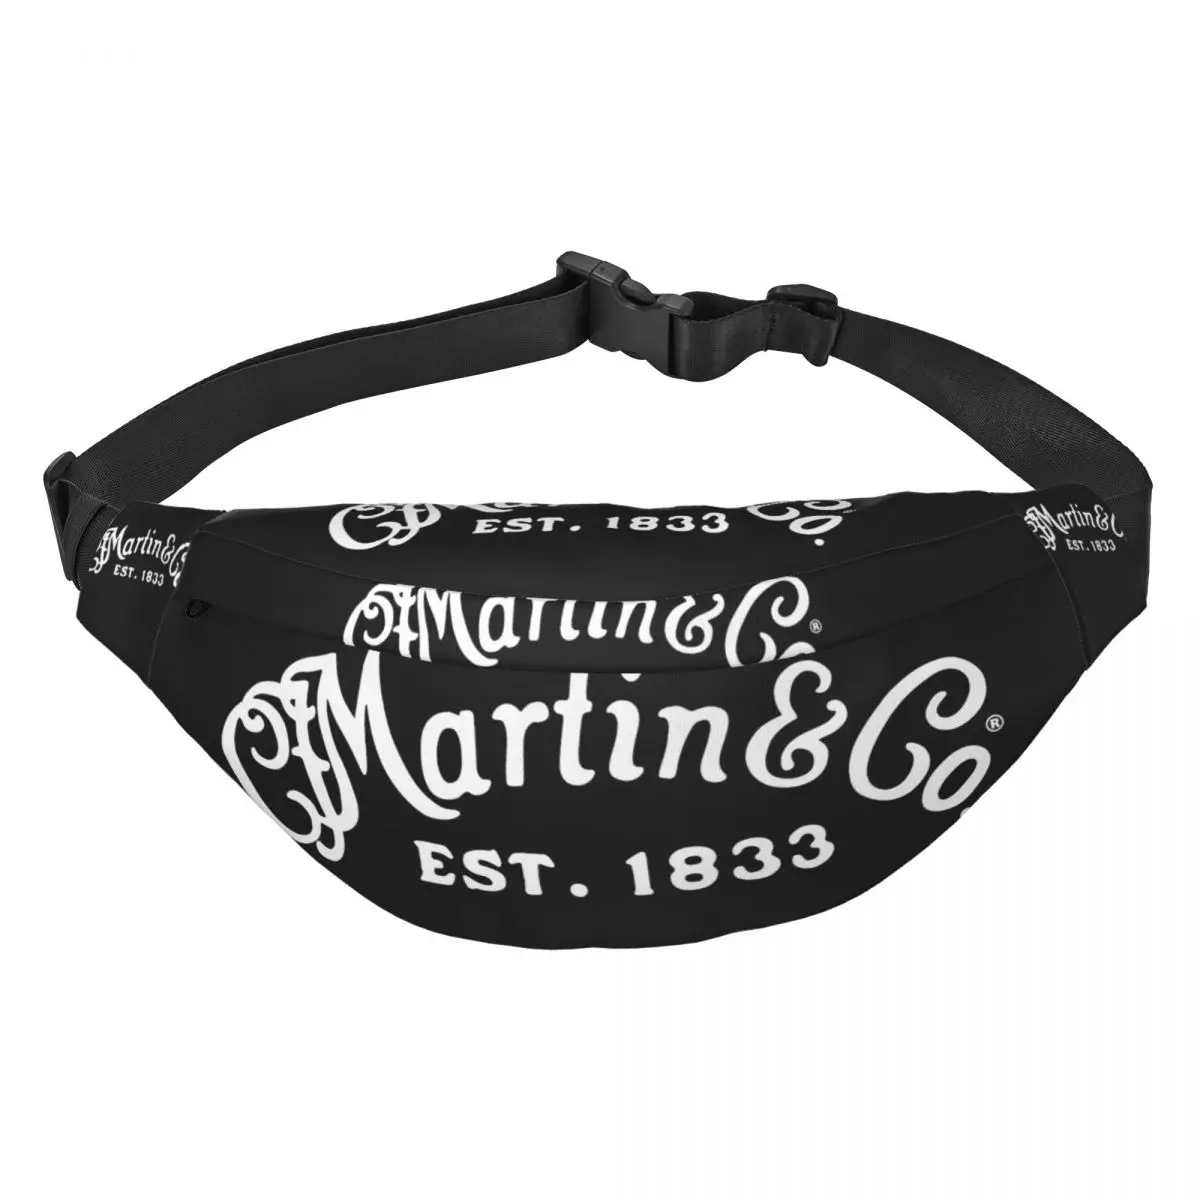 Martin Guitar Unisex Waist Bag Multifunction Sling Crossbody Bags Chest Bags Short Trip Waist Pack